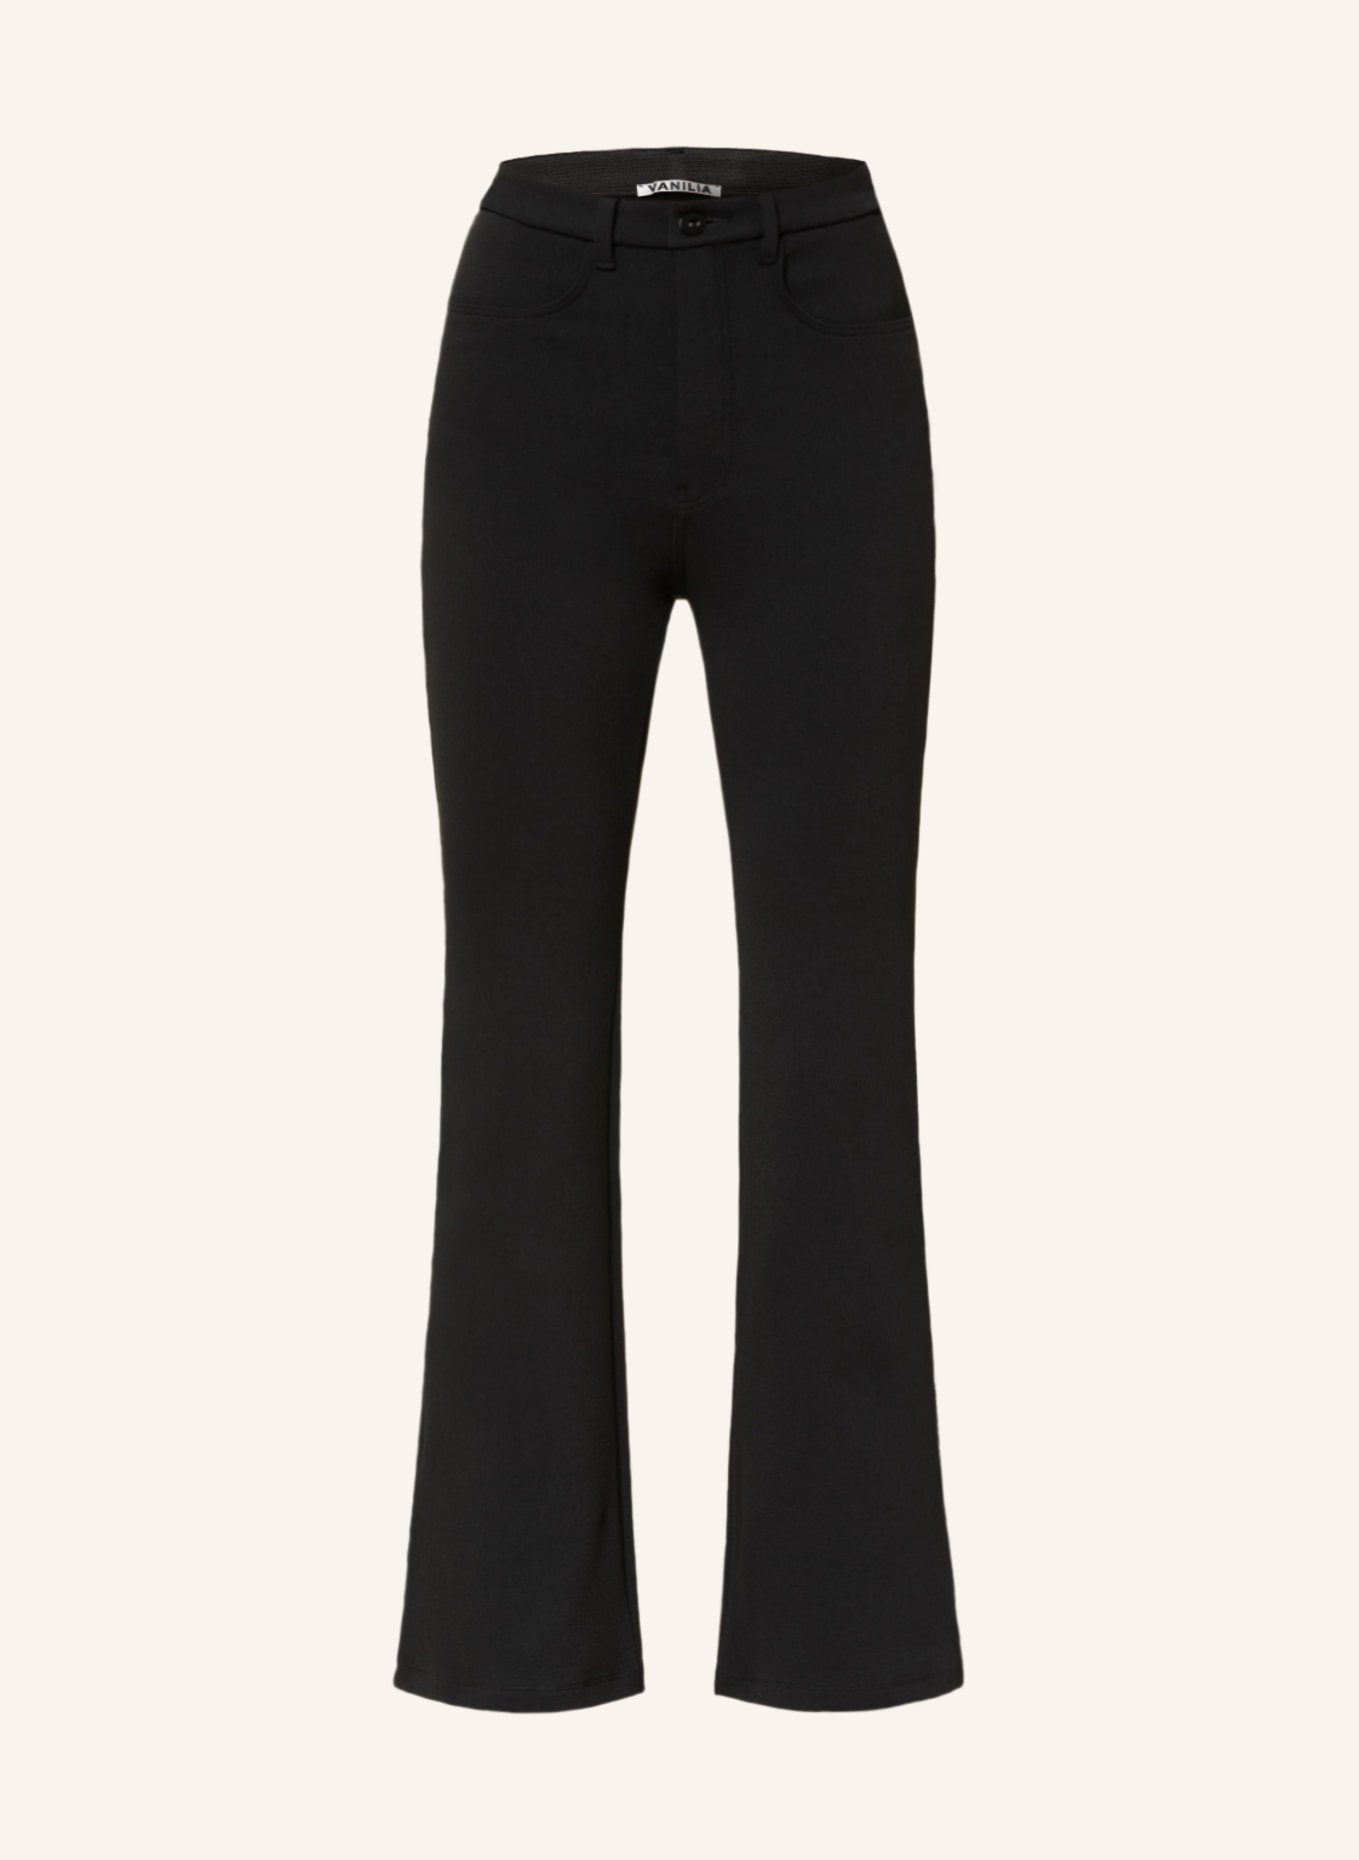 VANILIA Bootcut trousers in black